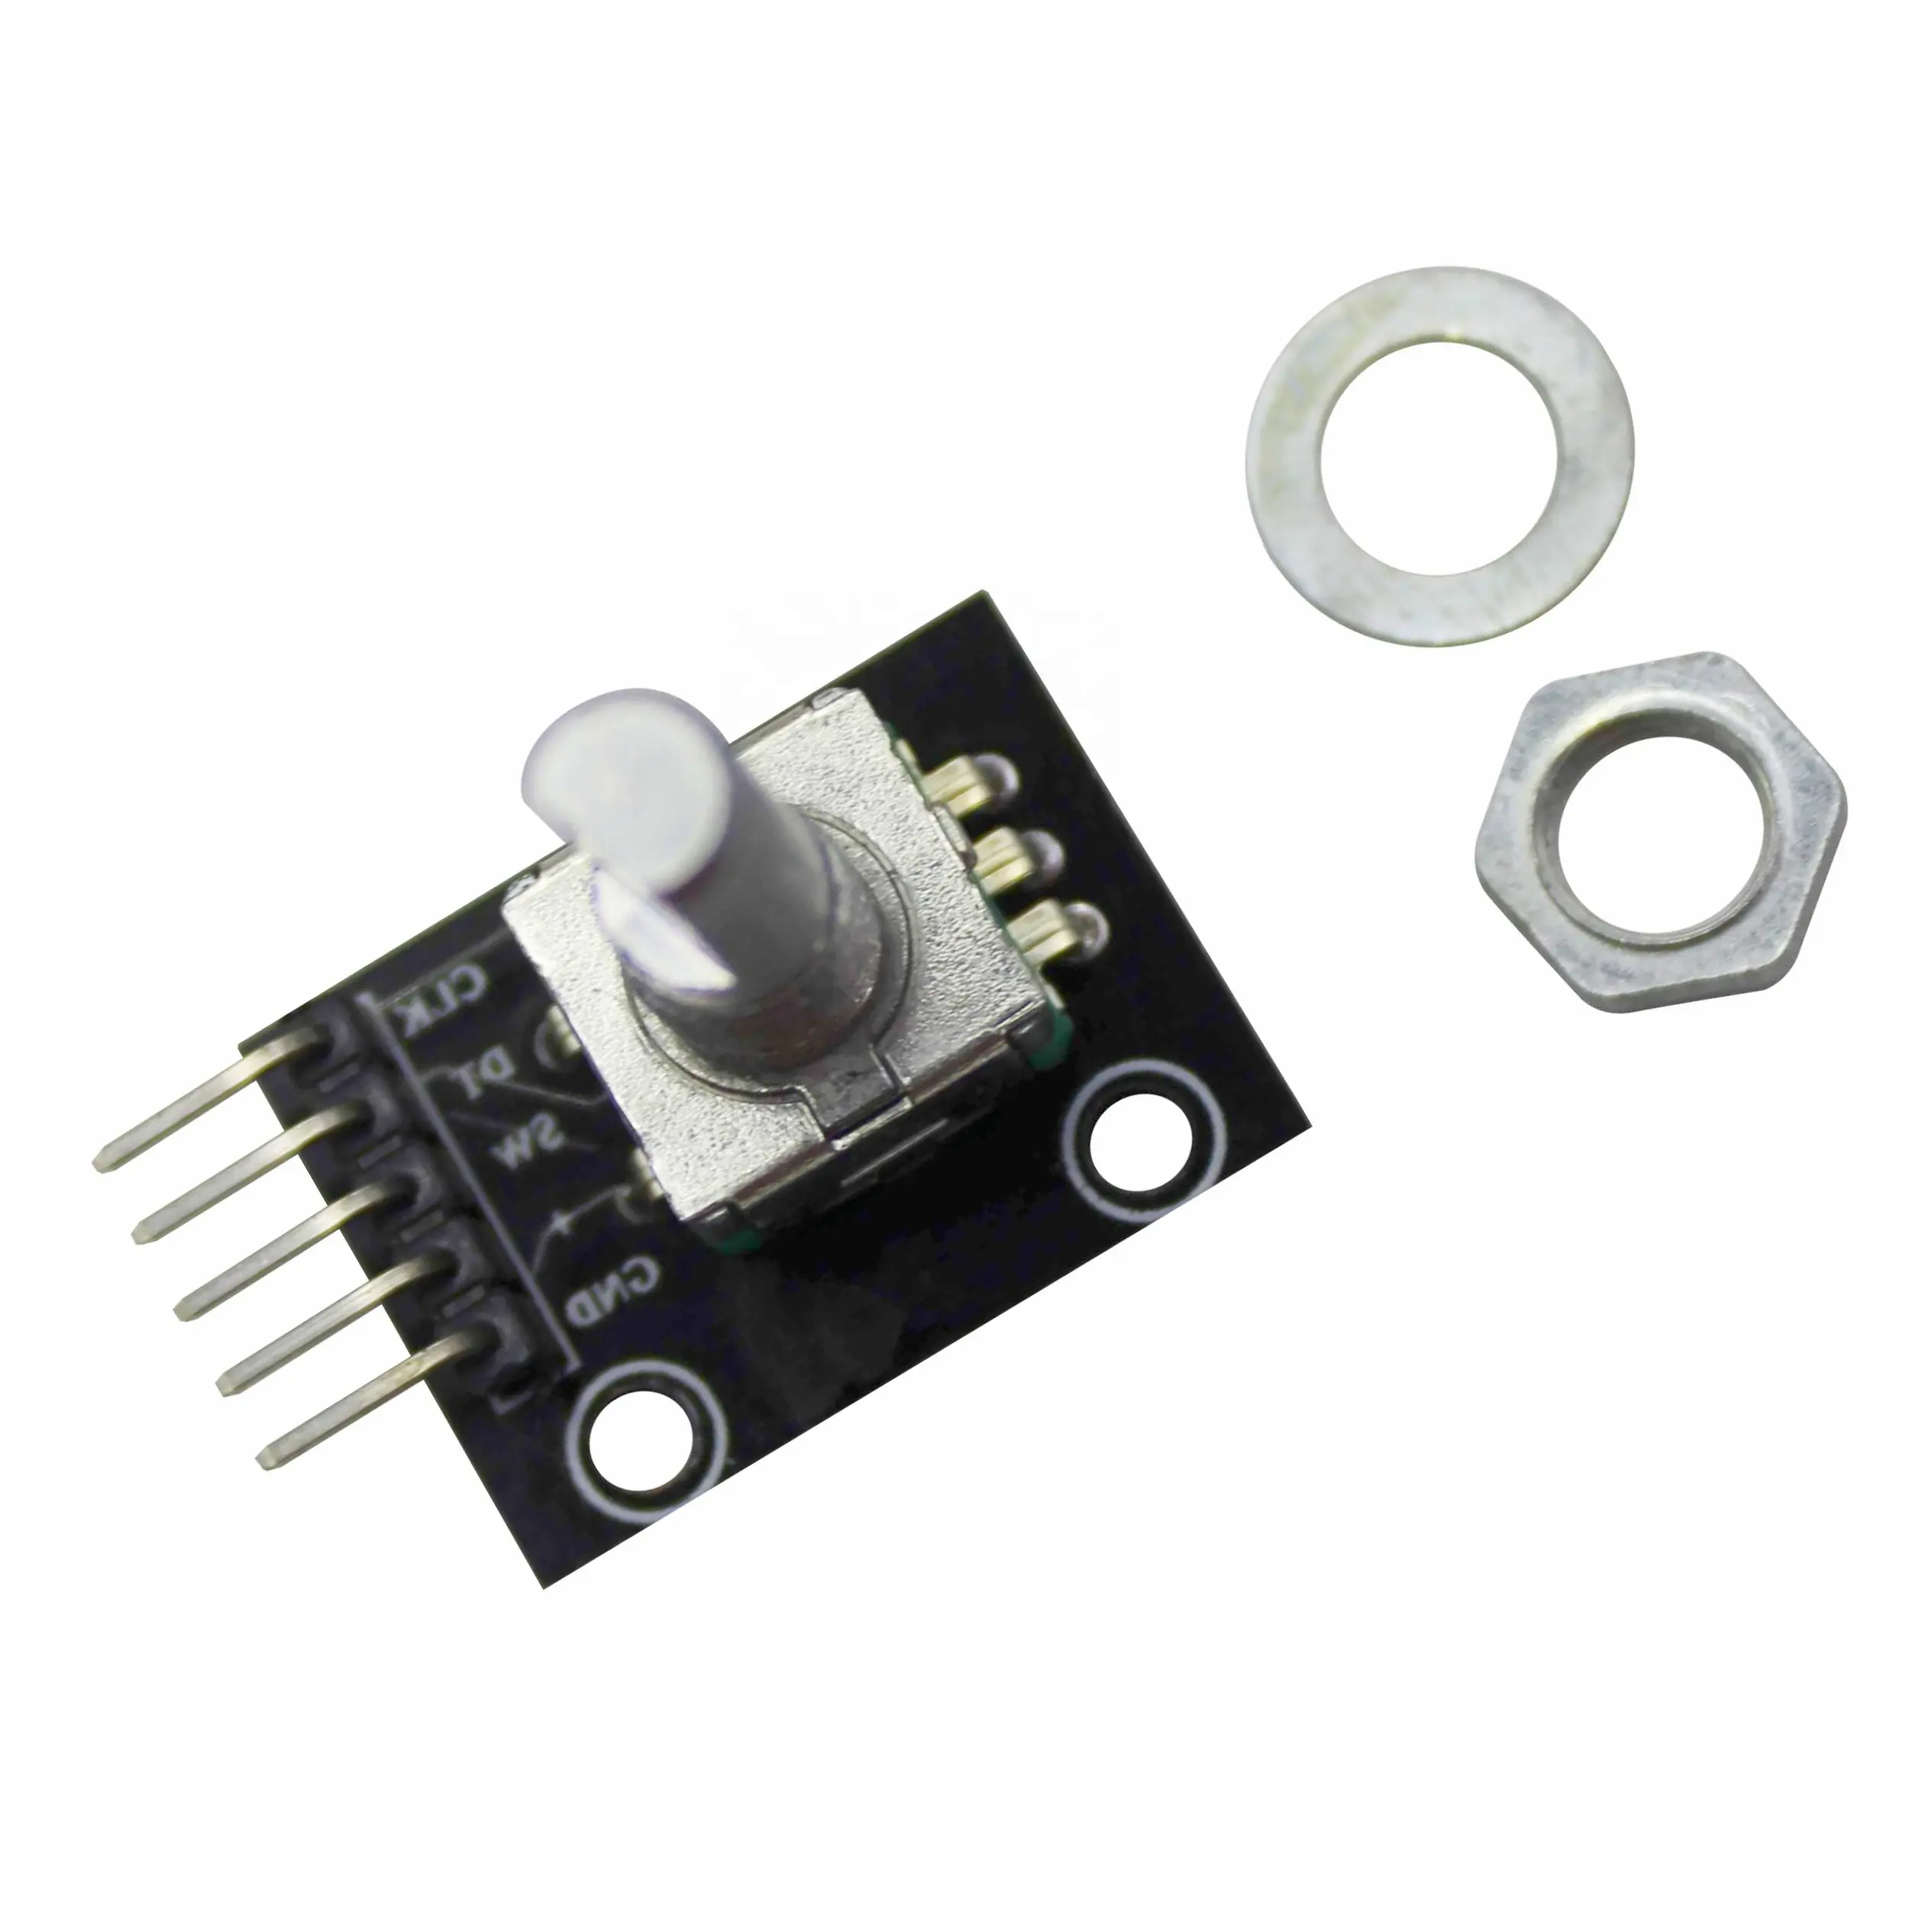 Hot Selling KY-040 360 Graden Roterende Encoder Module Baksteen Sensor Switch Ontwikkeling